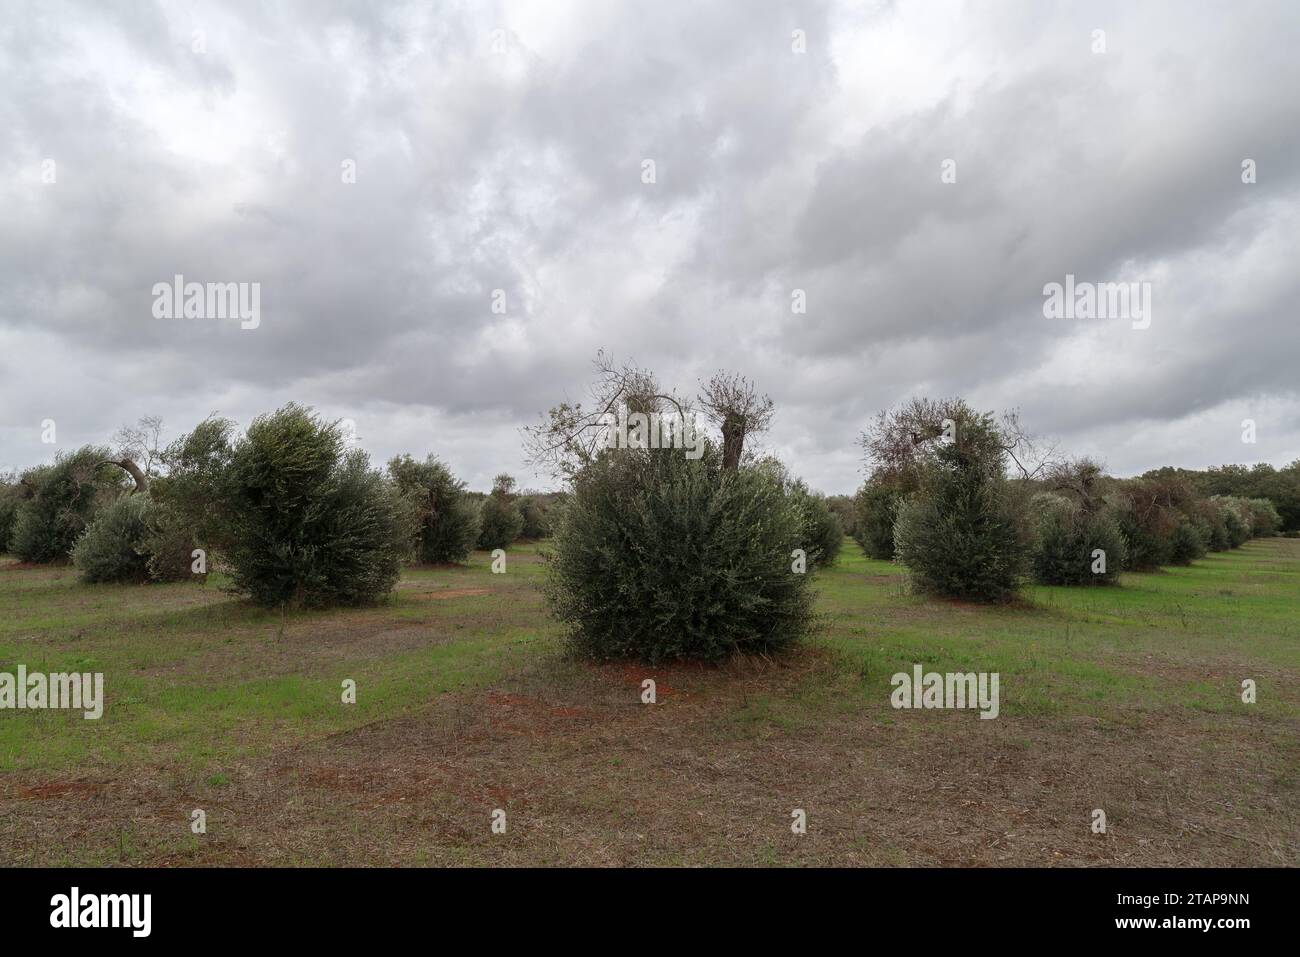 View of olive trees hit by bacteria Xylella fastidiosa in Lecce, Puglia region, Italy Stock Photo